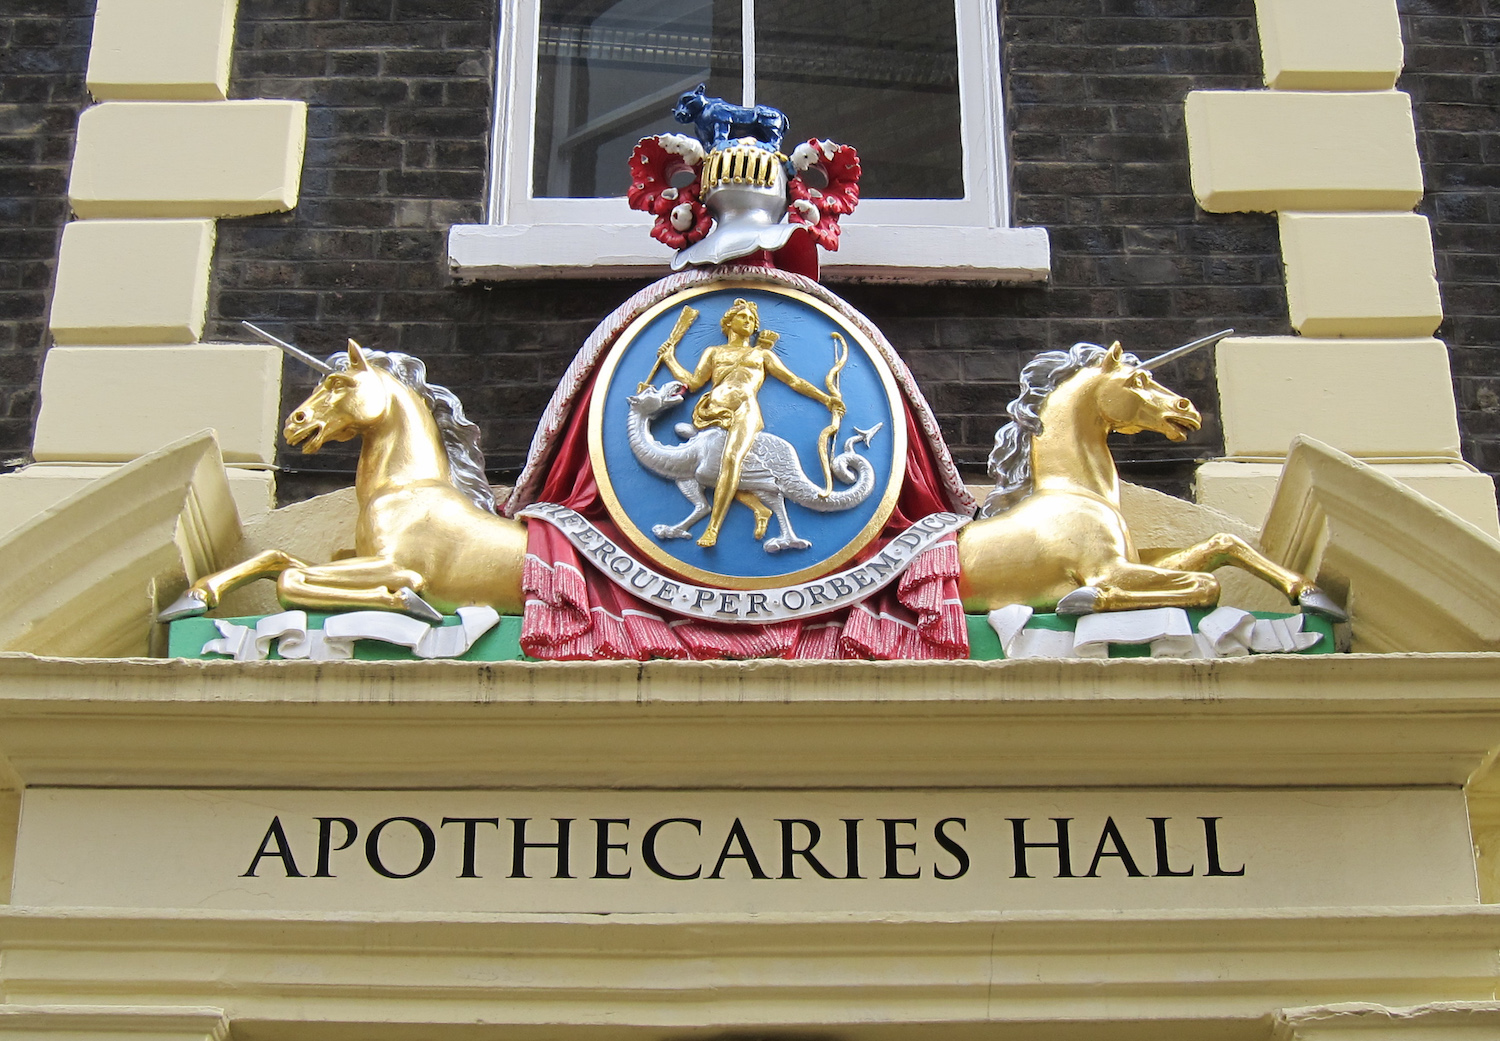 Apothecaries hall